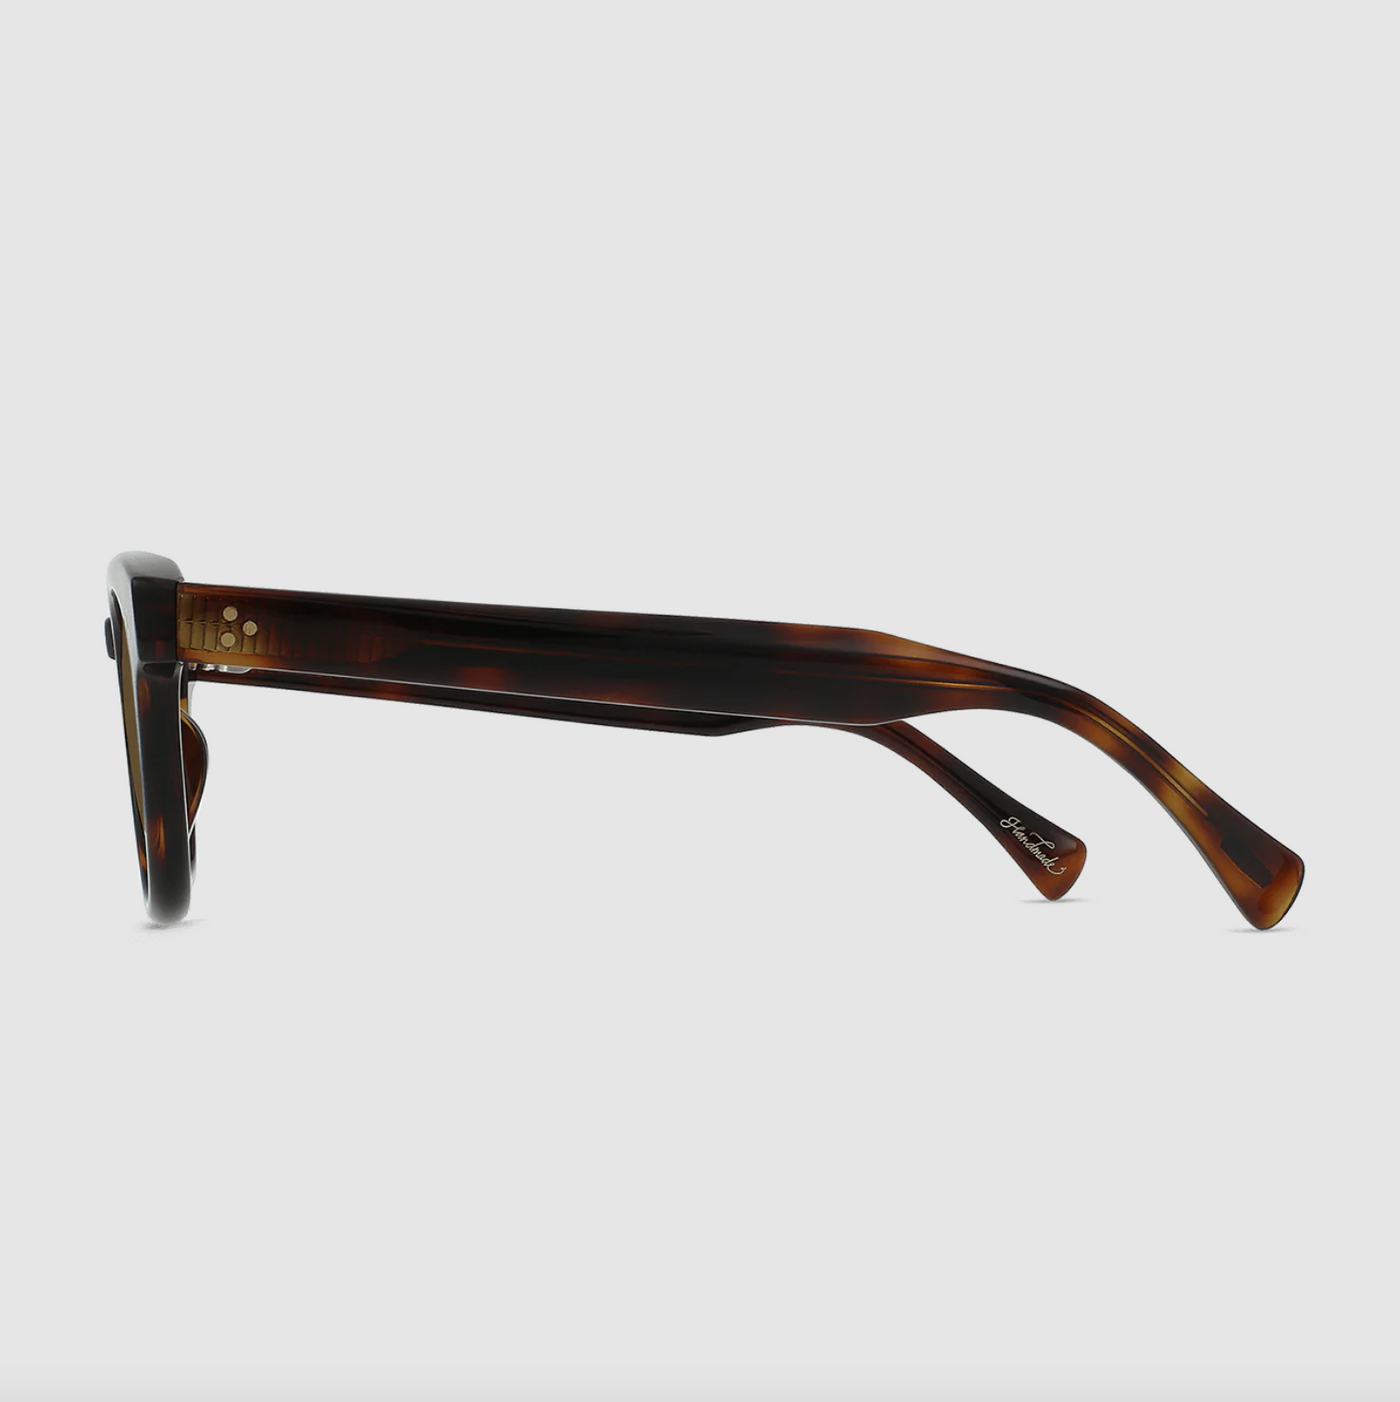 Raen - Squire 49 Sunglasses - Kola Tortoise / Caramel